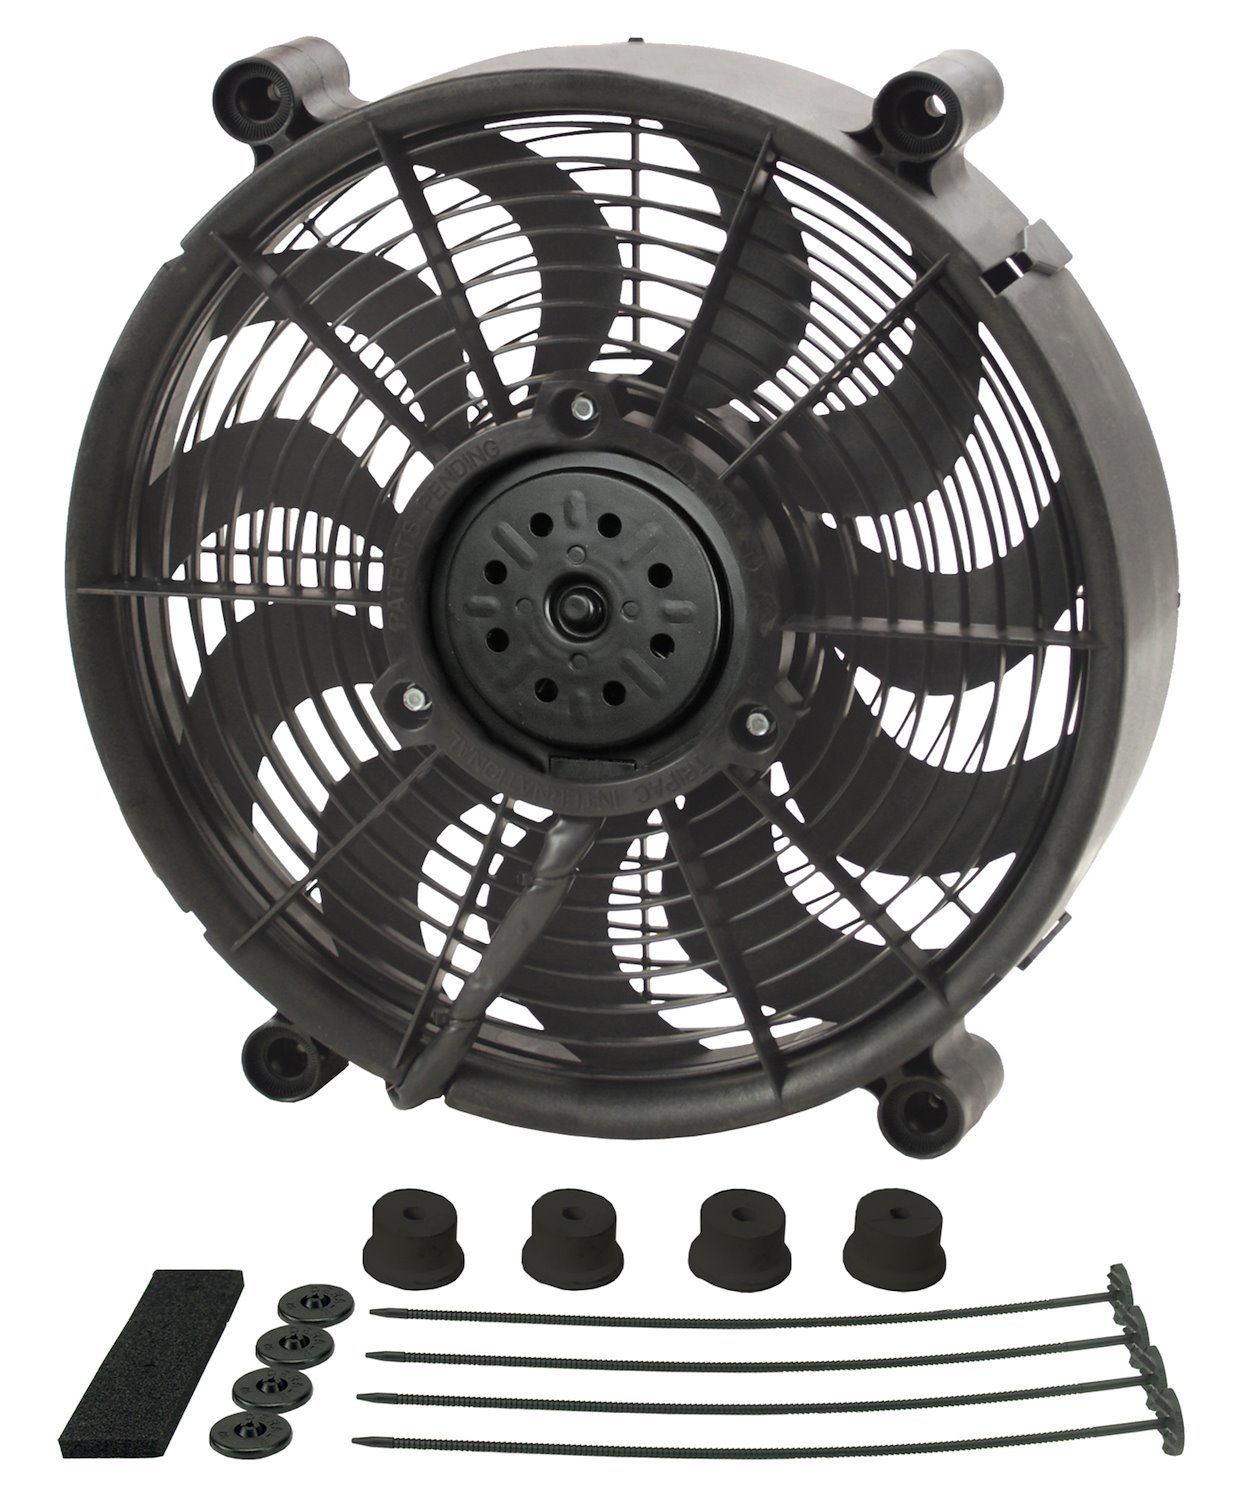 12" High Output Single RAD Electric Fan - Standard Mounting Kit 1450/1000 cfm